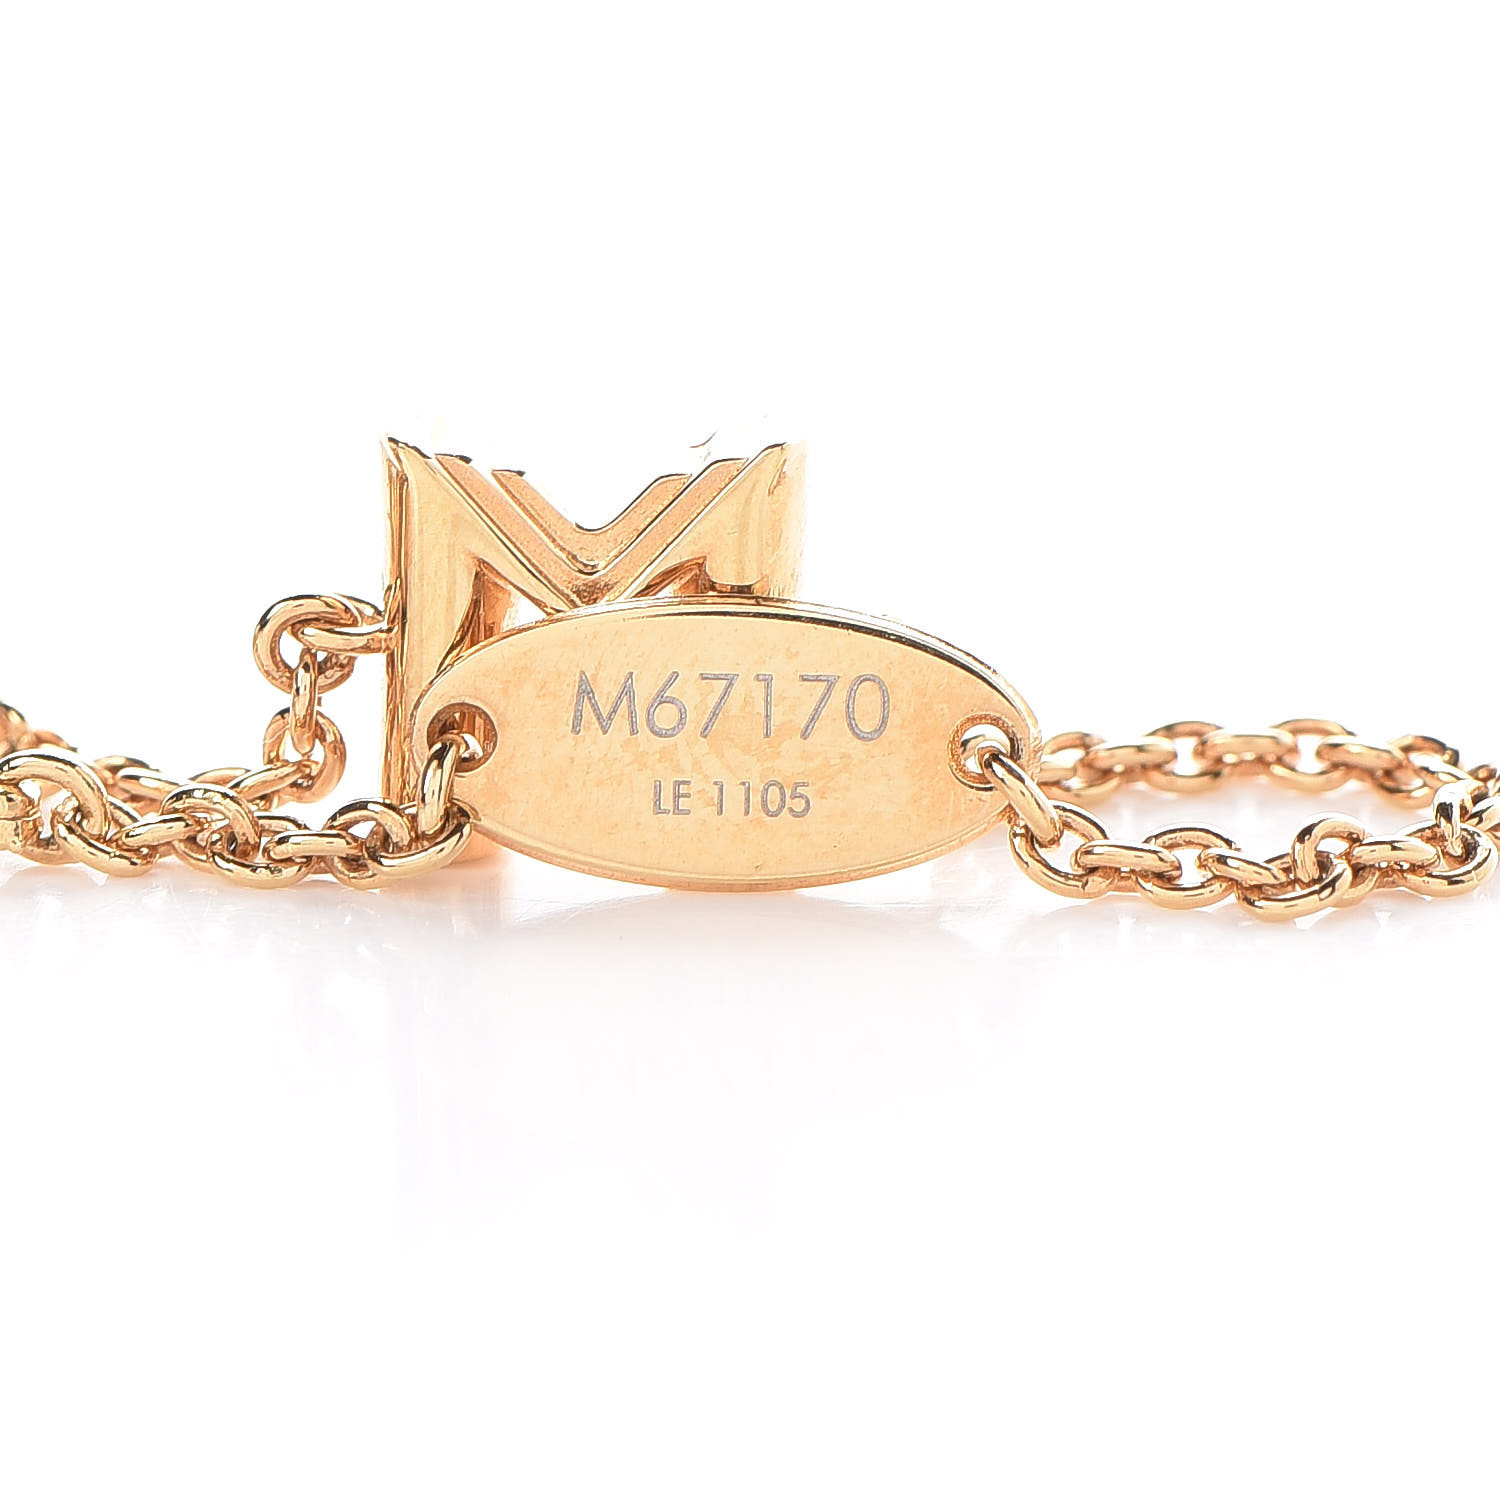 Louis Vuitton Monogram Chain Bracelet Goldsboro